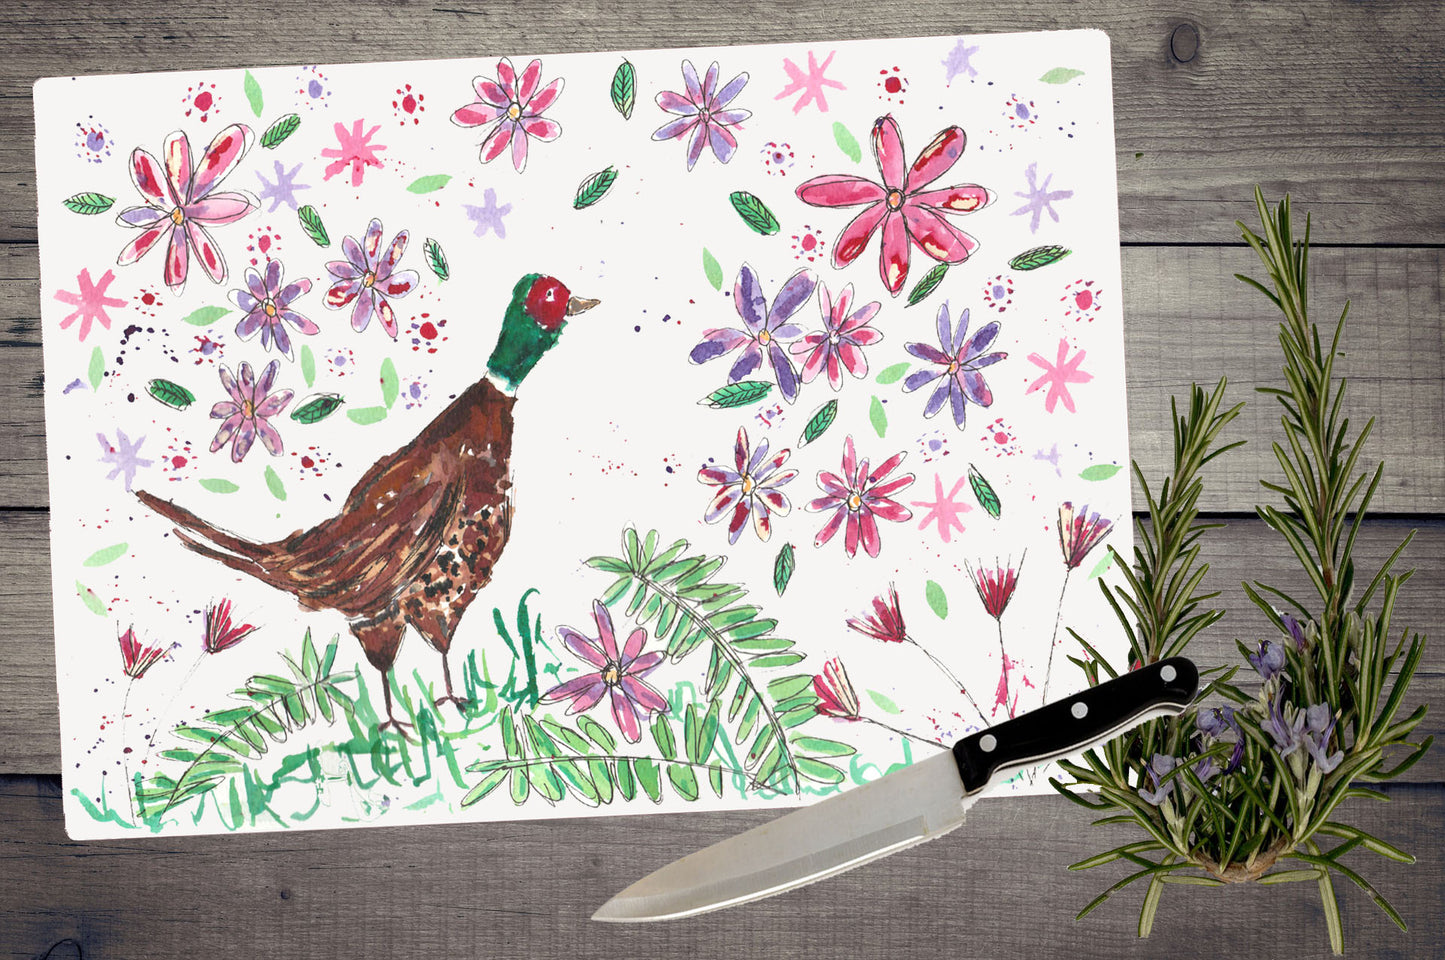 Pheasant chopping board / Worktop saver